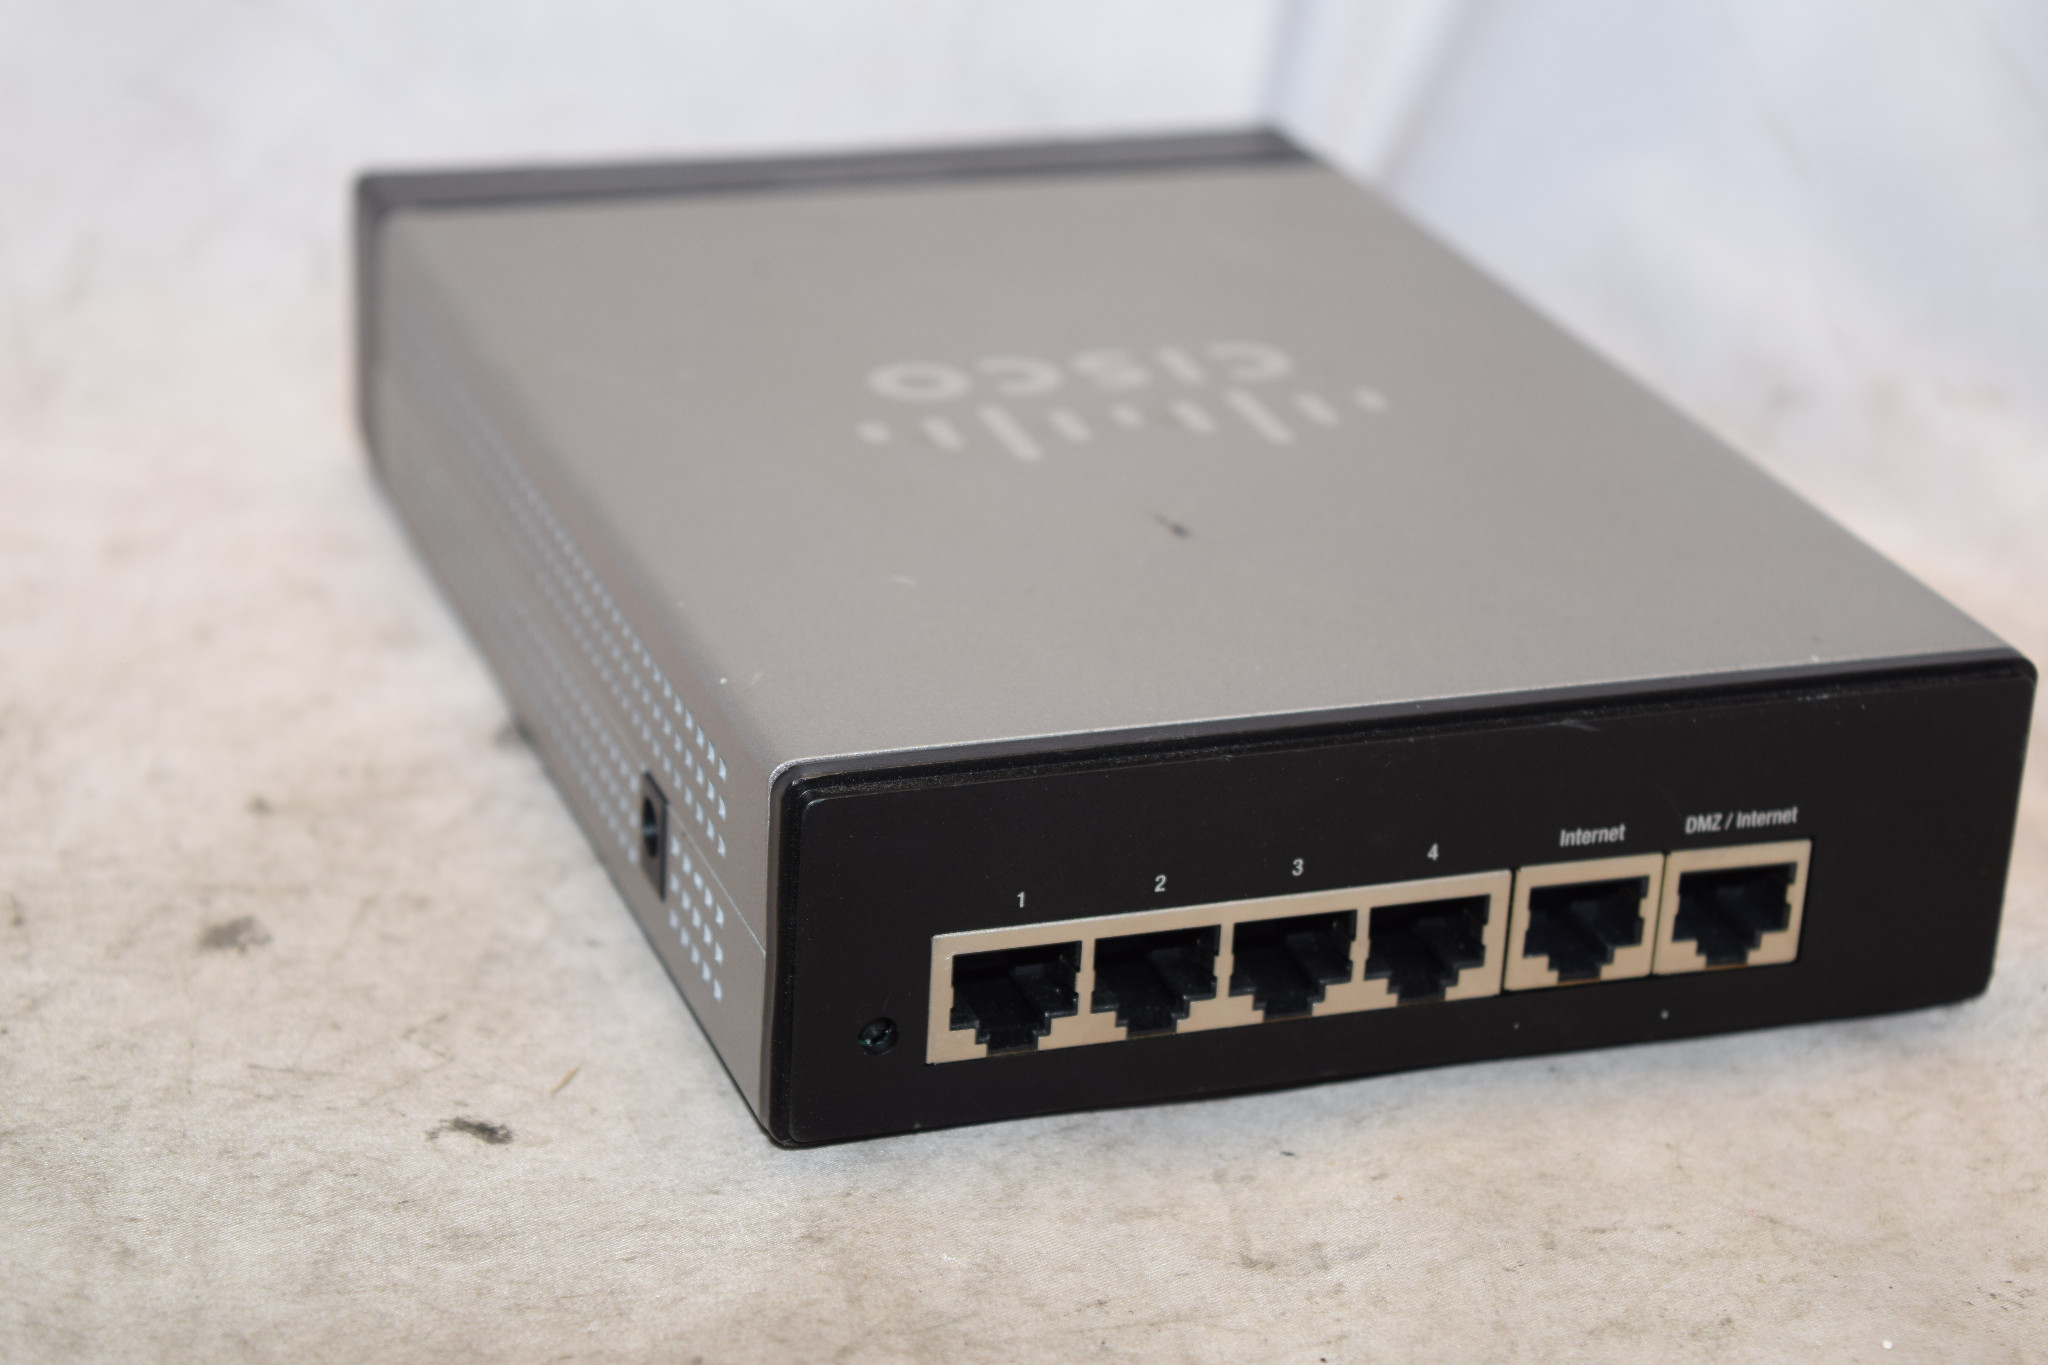 cisco rv042 4-port fast ethernet dual wan vpn router